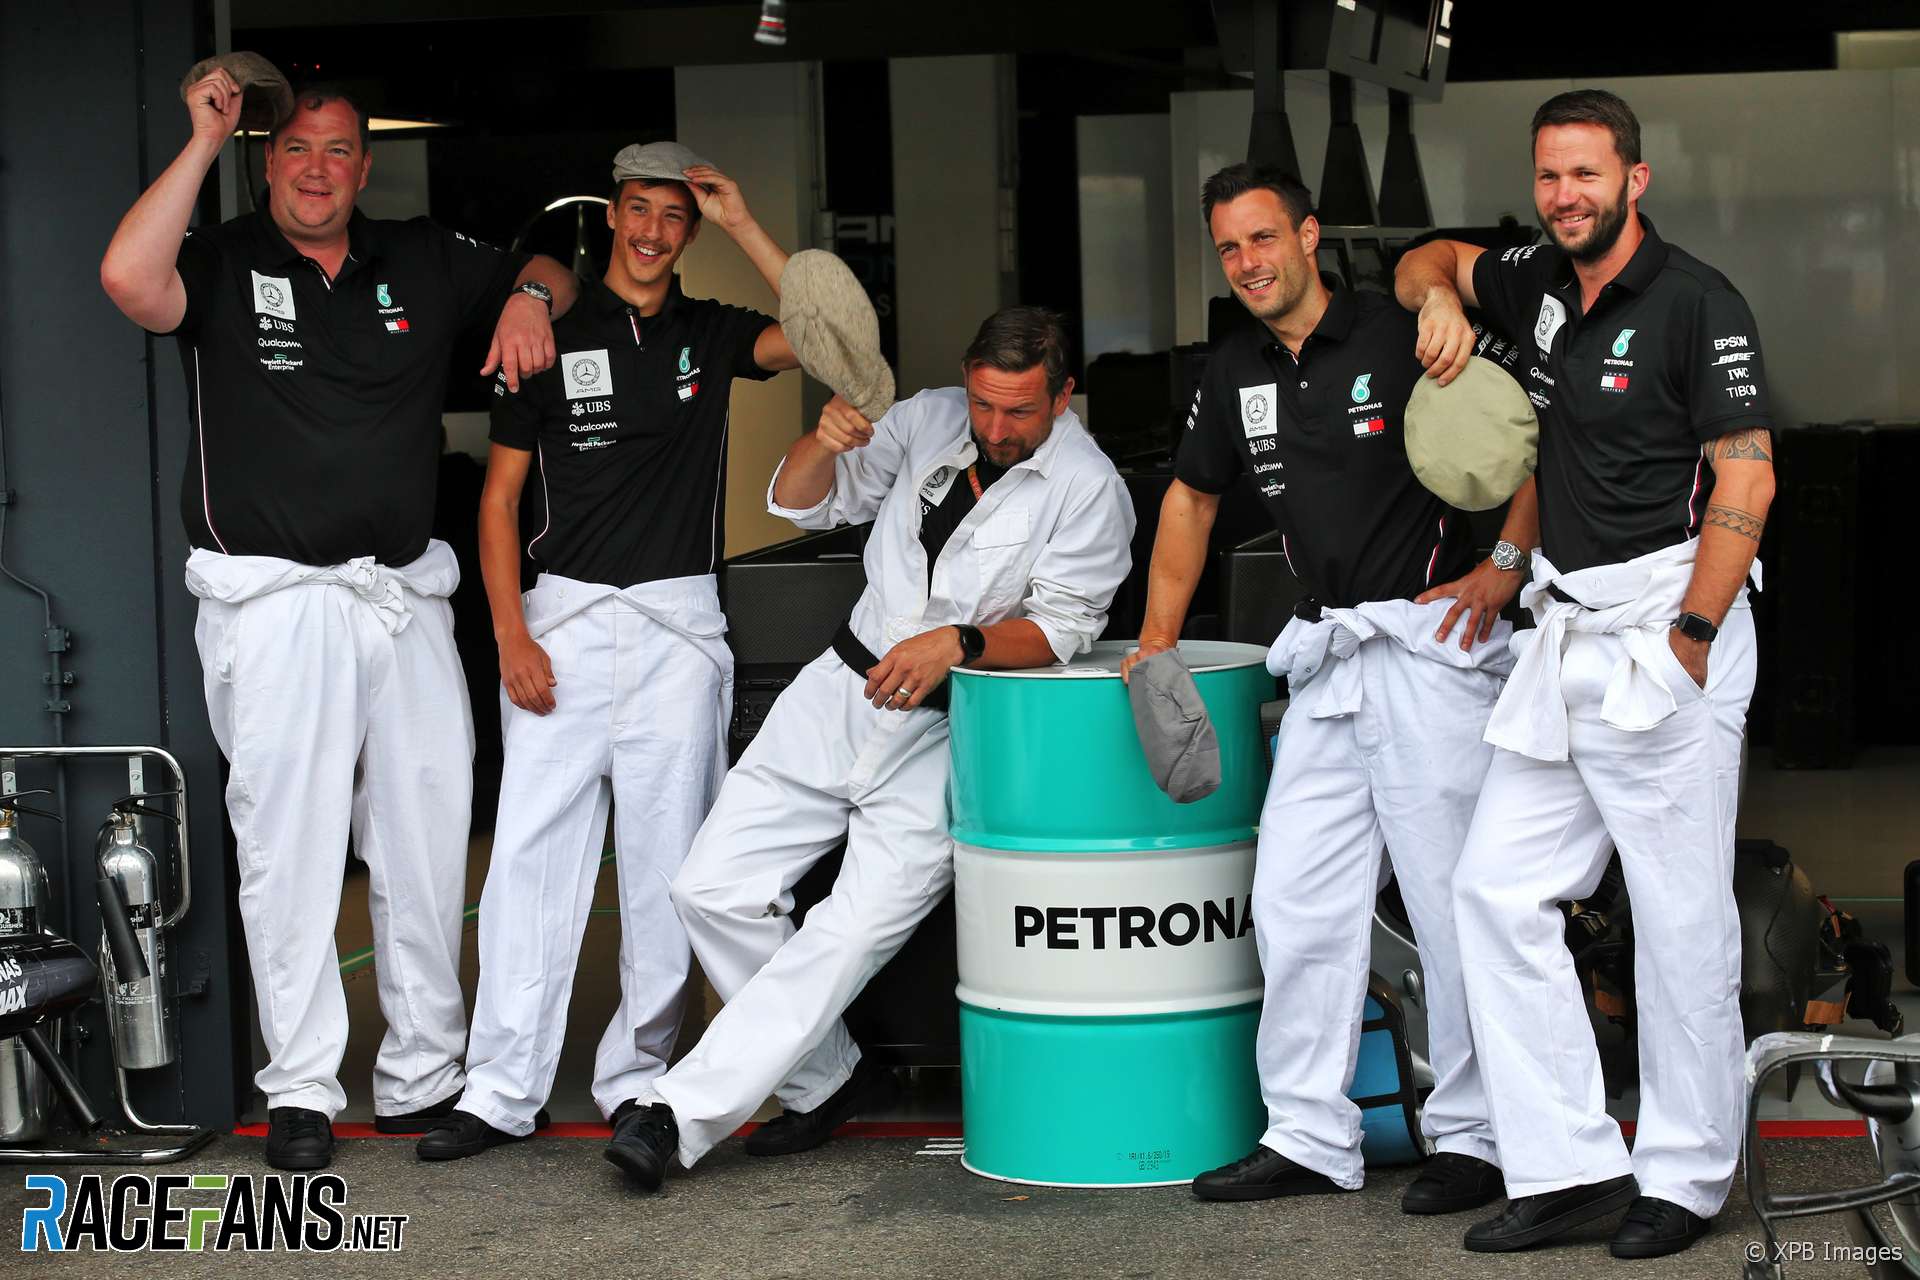 Mercedes team members, Hockenheimring, 2019